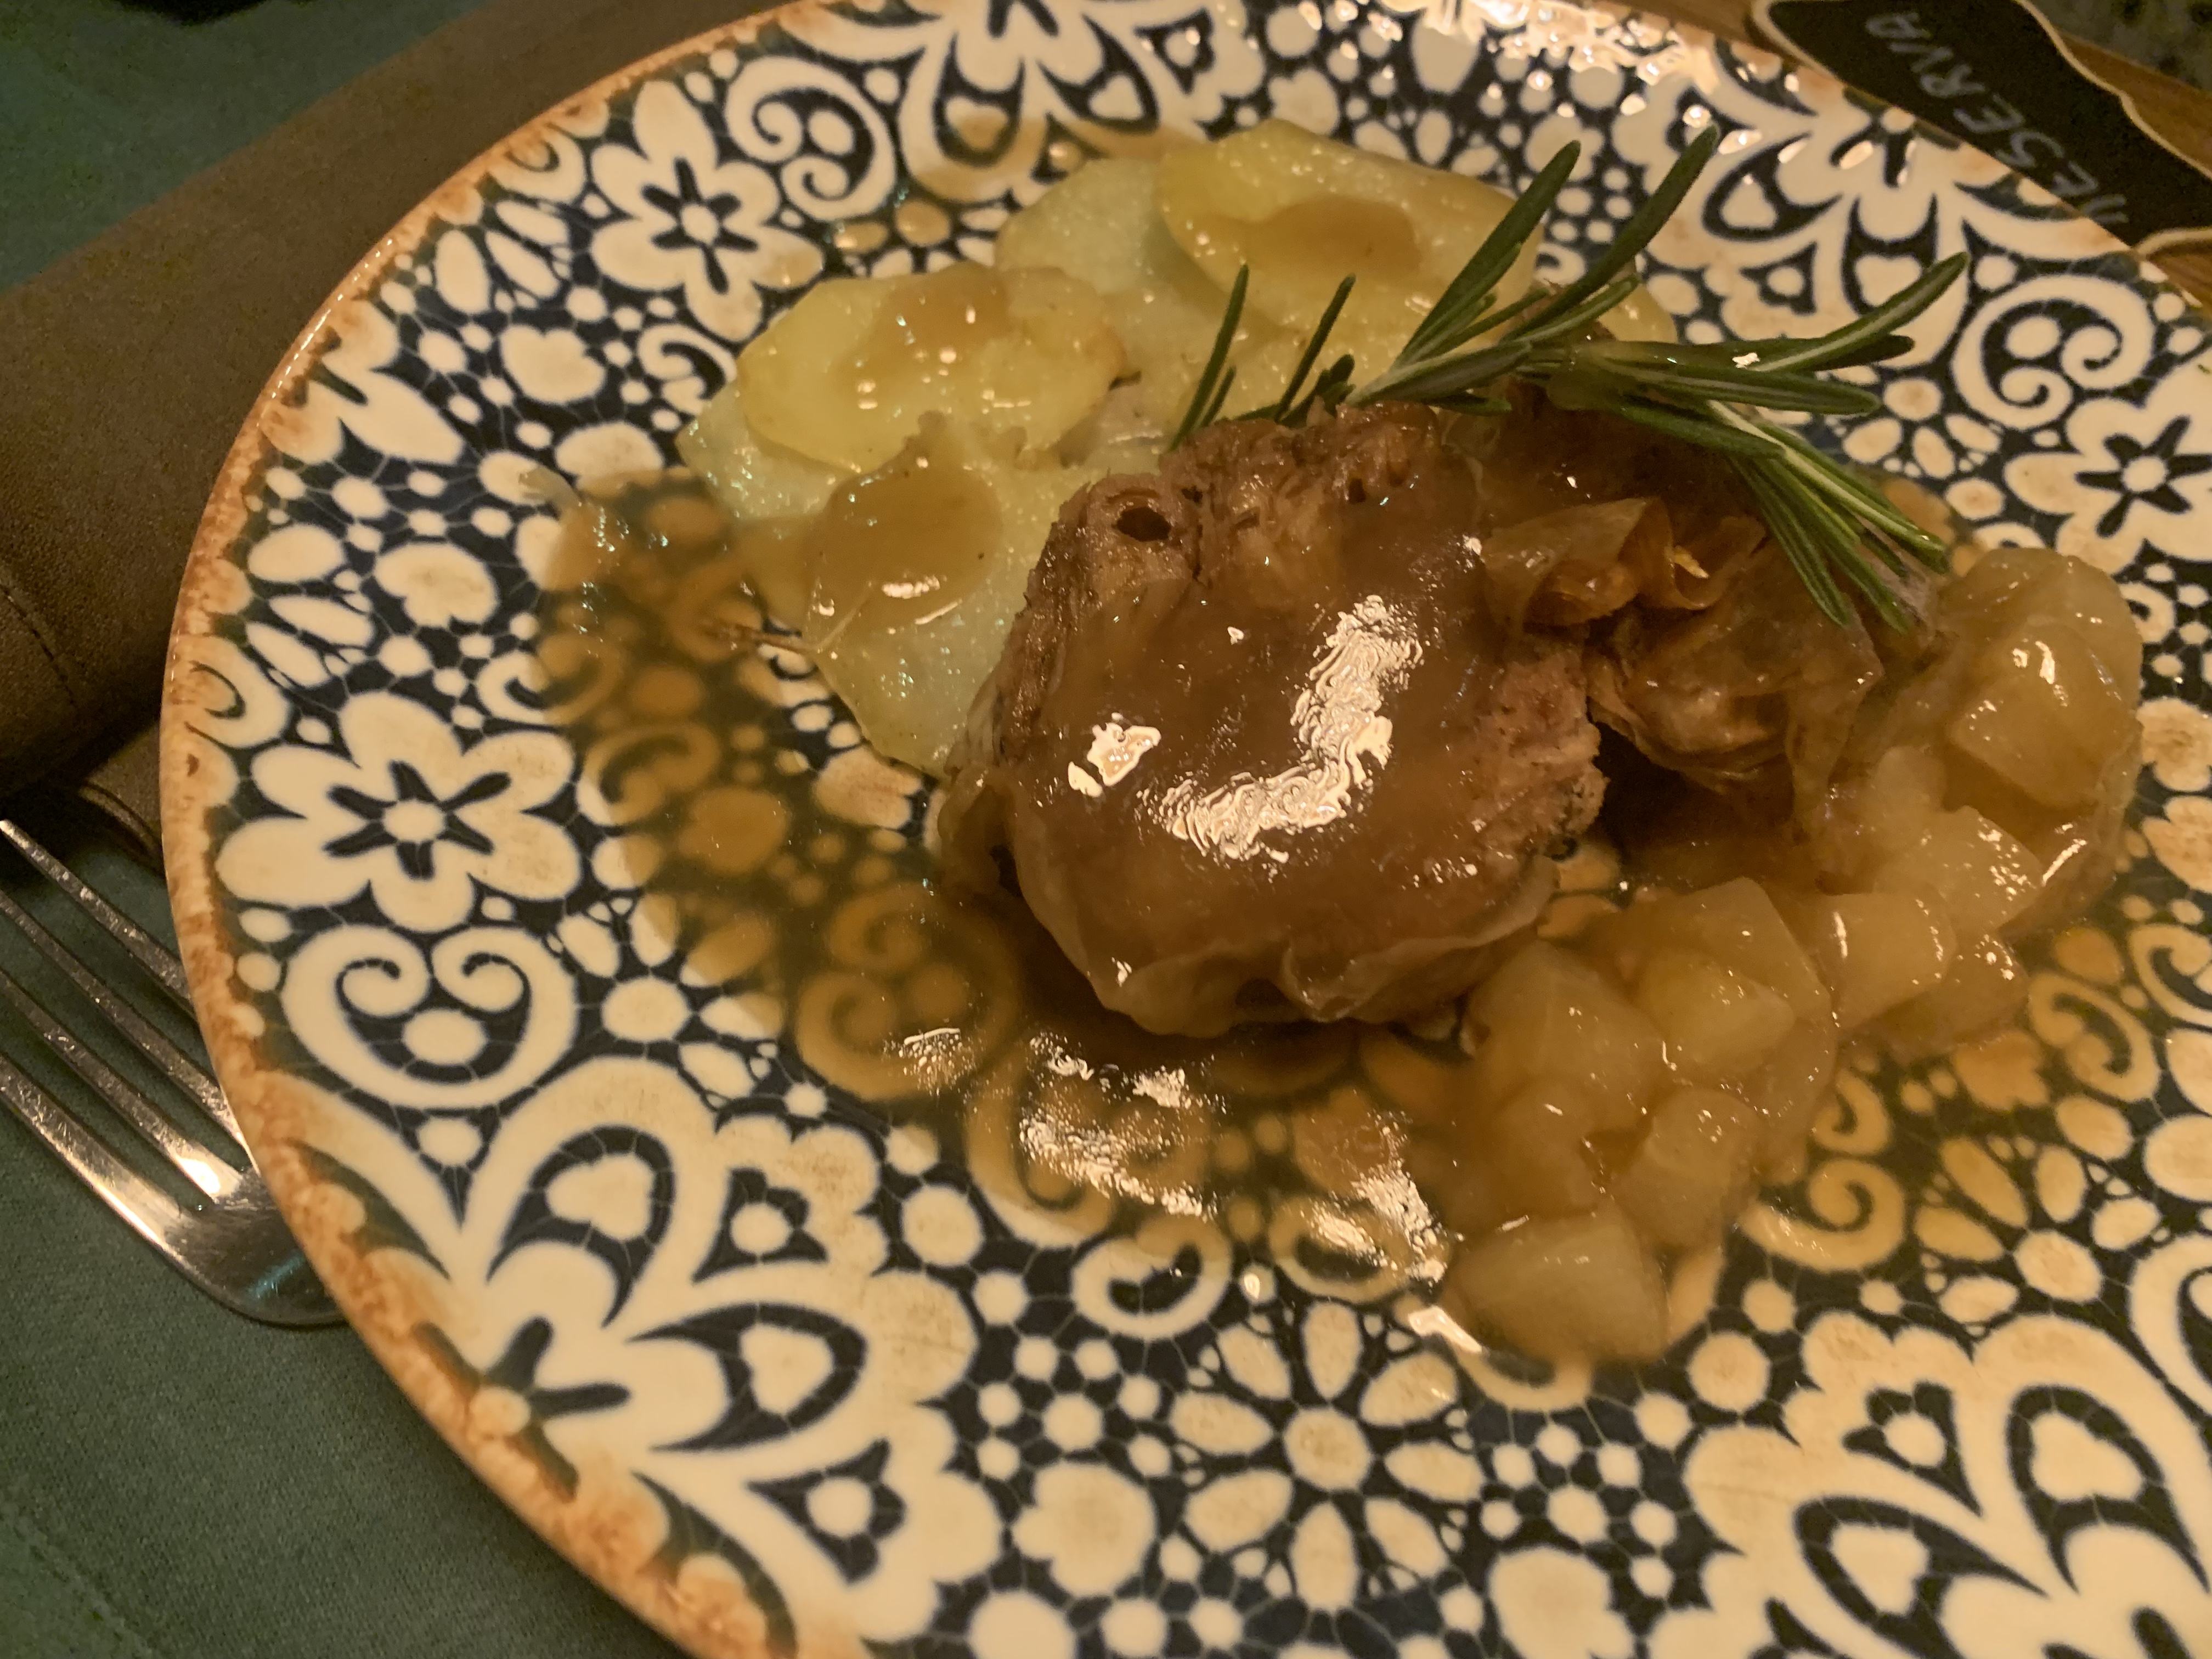 'NotLamb' with baked potato and sautéed pear.